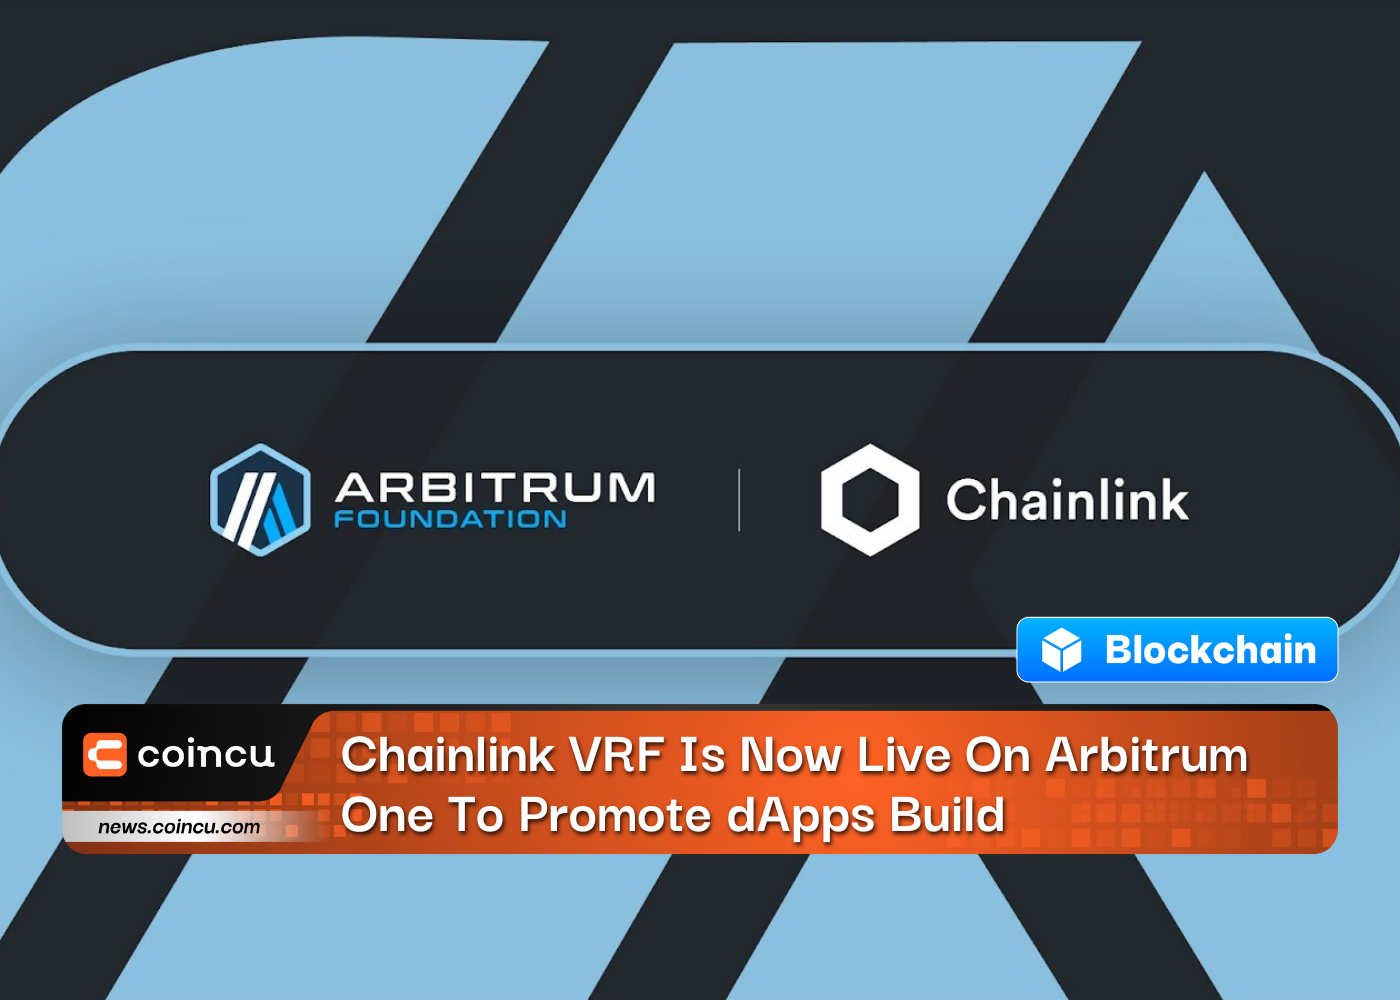 Chainlink VRF が Arbitrum One で稼働し、dApps ビルドを促進